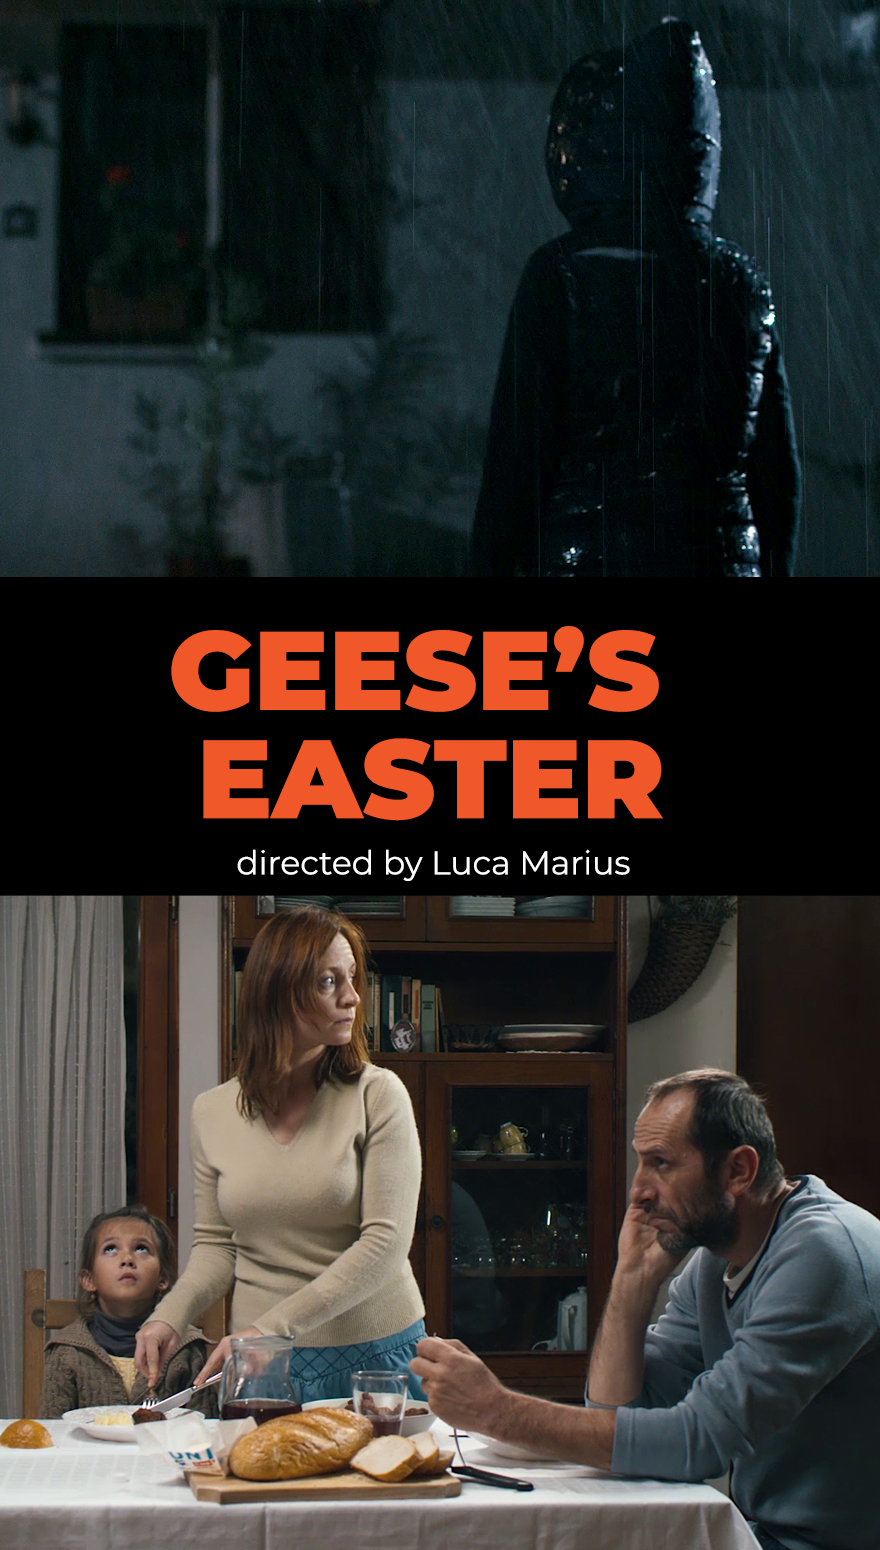 Geese’s Easter - shortfilm made by Luca Marius - online on CINEPUB